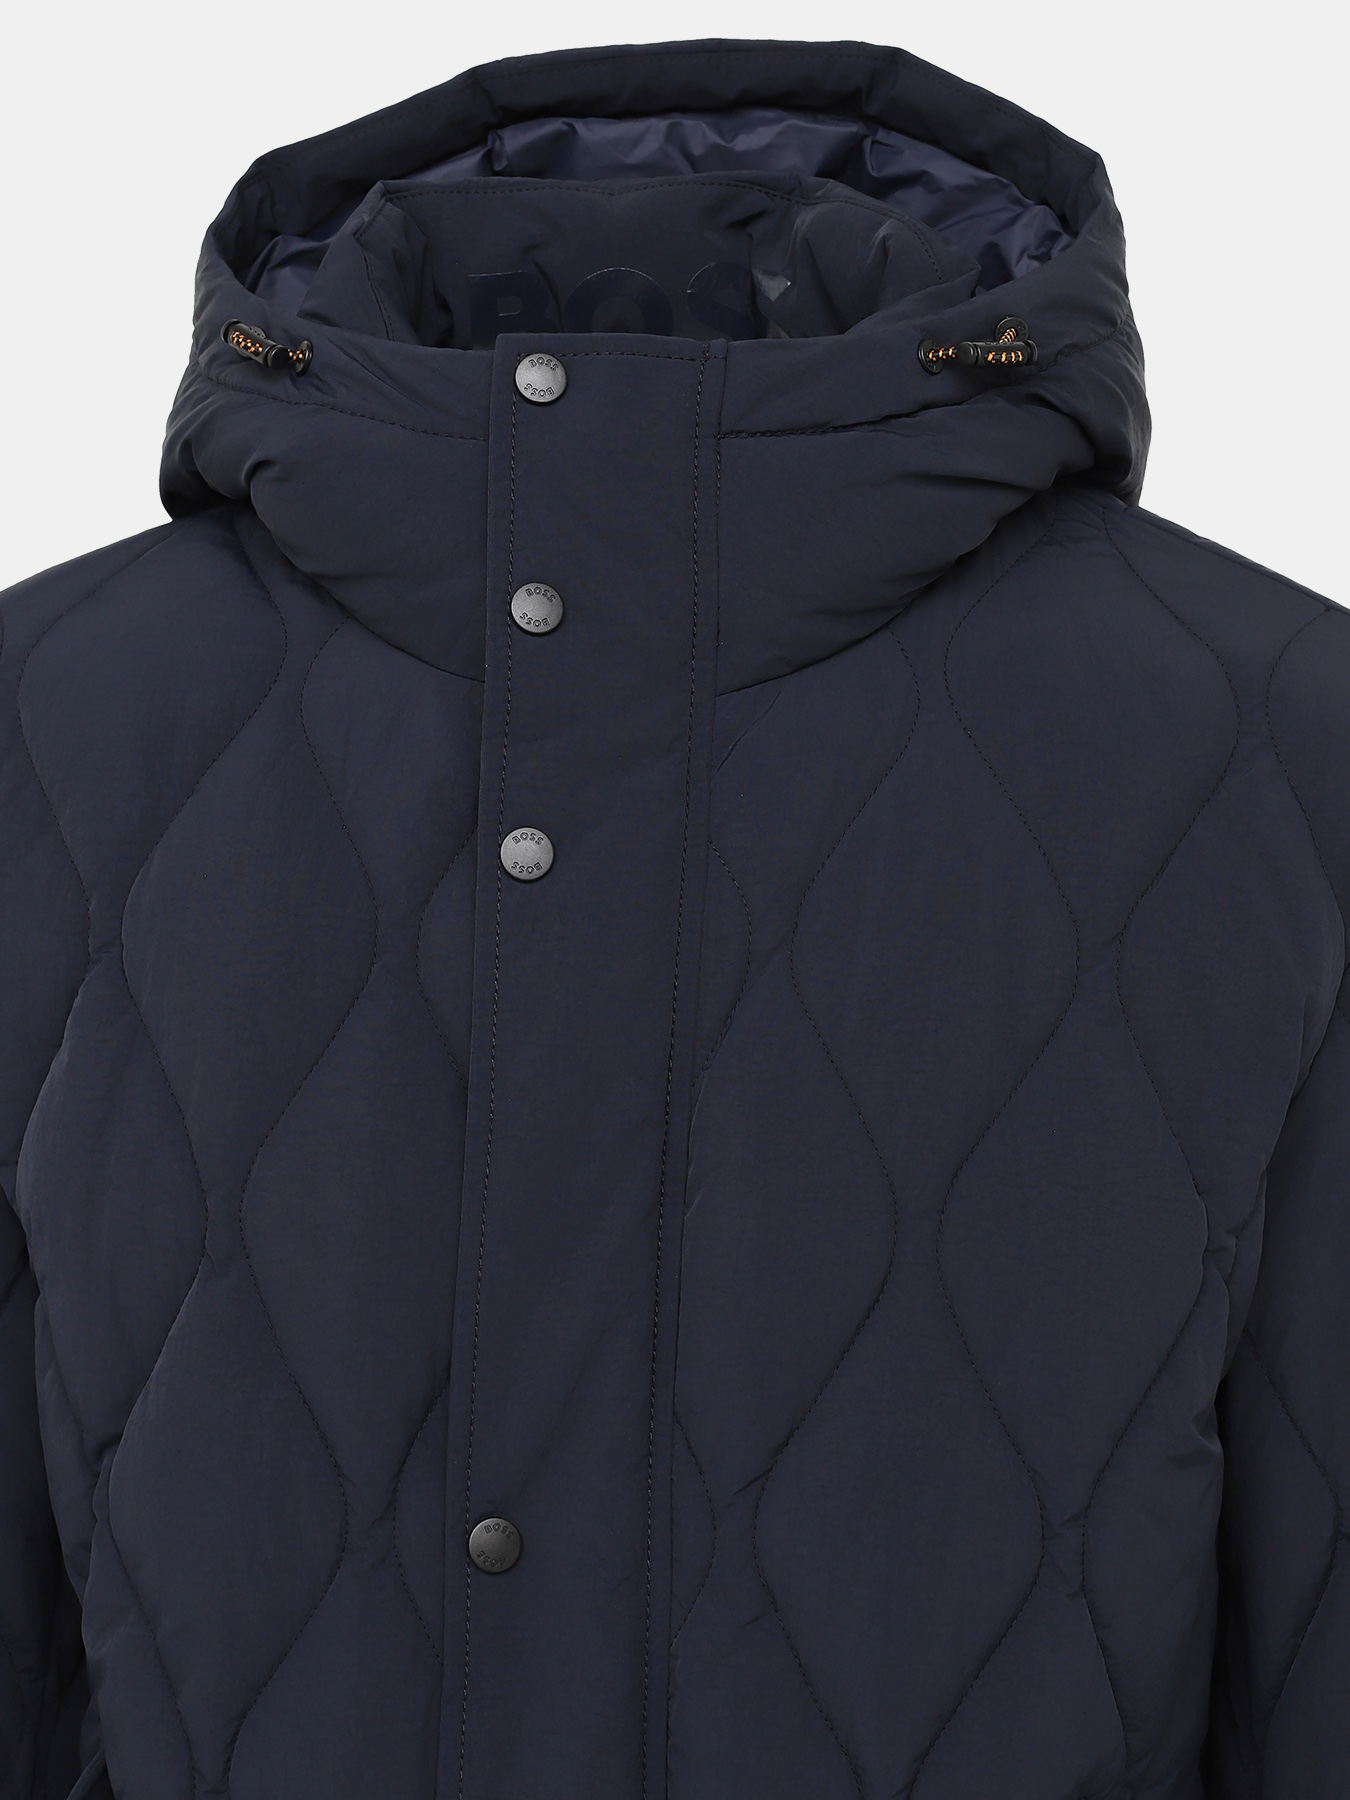 Куртка Onlet BOSS 424685-026, цвет темно-синий, размер 50 - фото 4